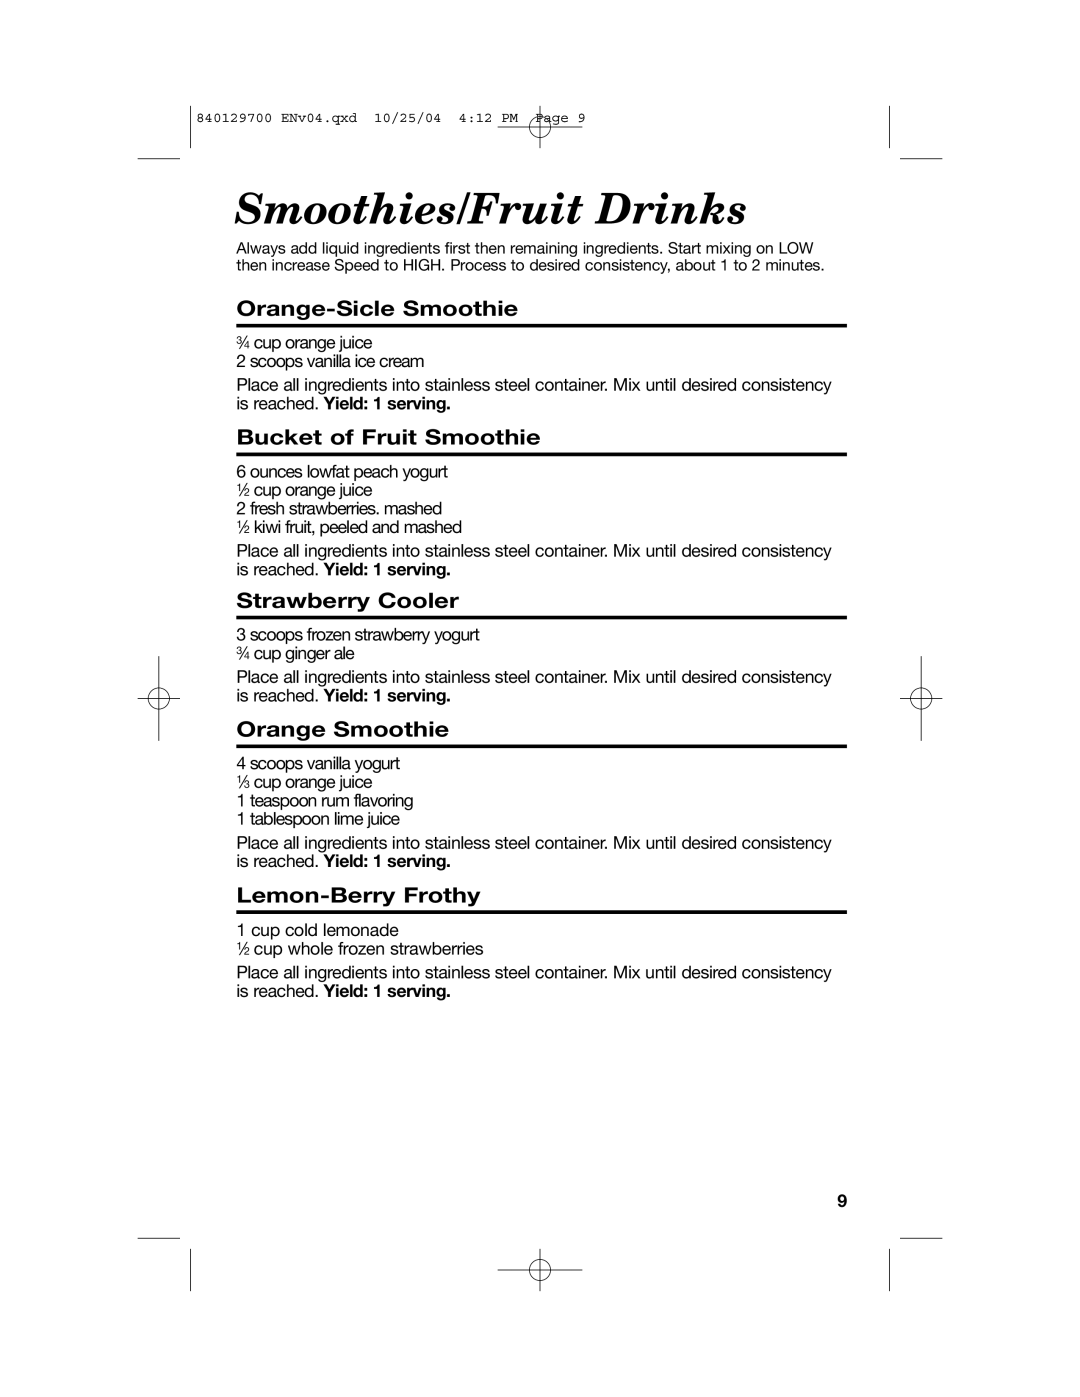 Hamilton Beach Drink Mixer manual Orange-Sicle Smoothie, Bucket of Fruit Smoothie, Strawberry Cooler, Orange Smoothie 